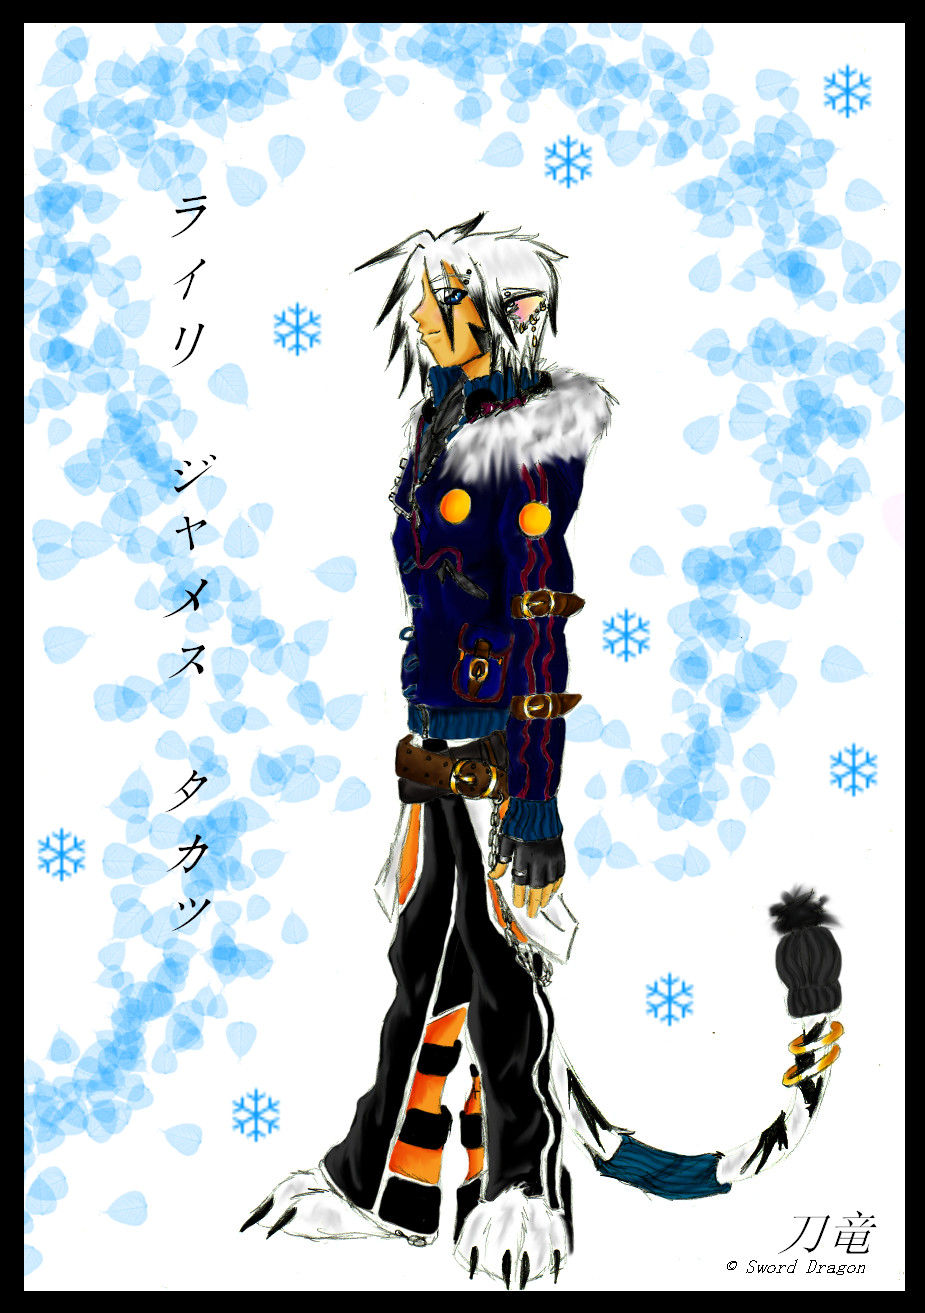 Snowy Tiger by sword_dragon